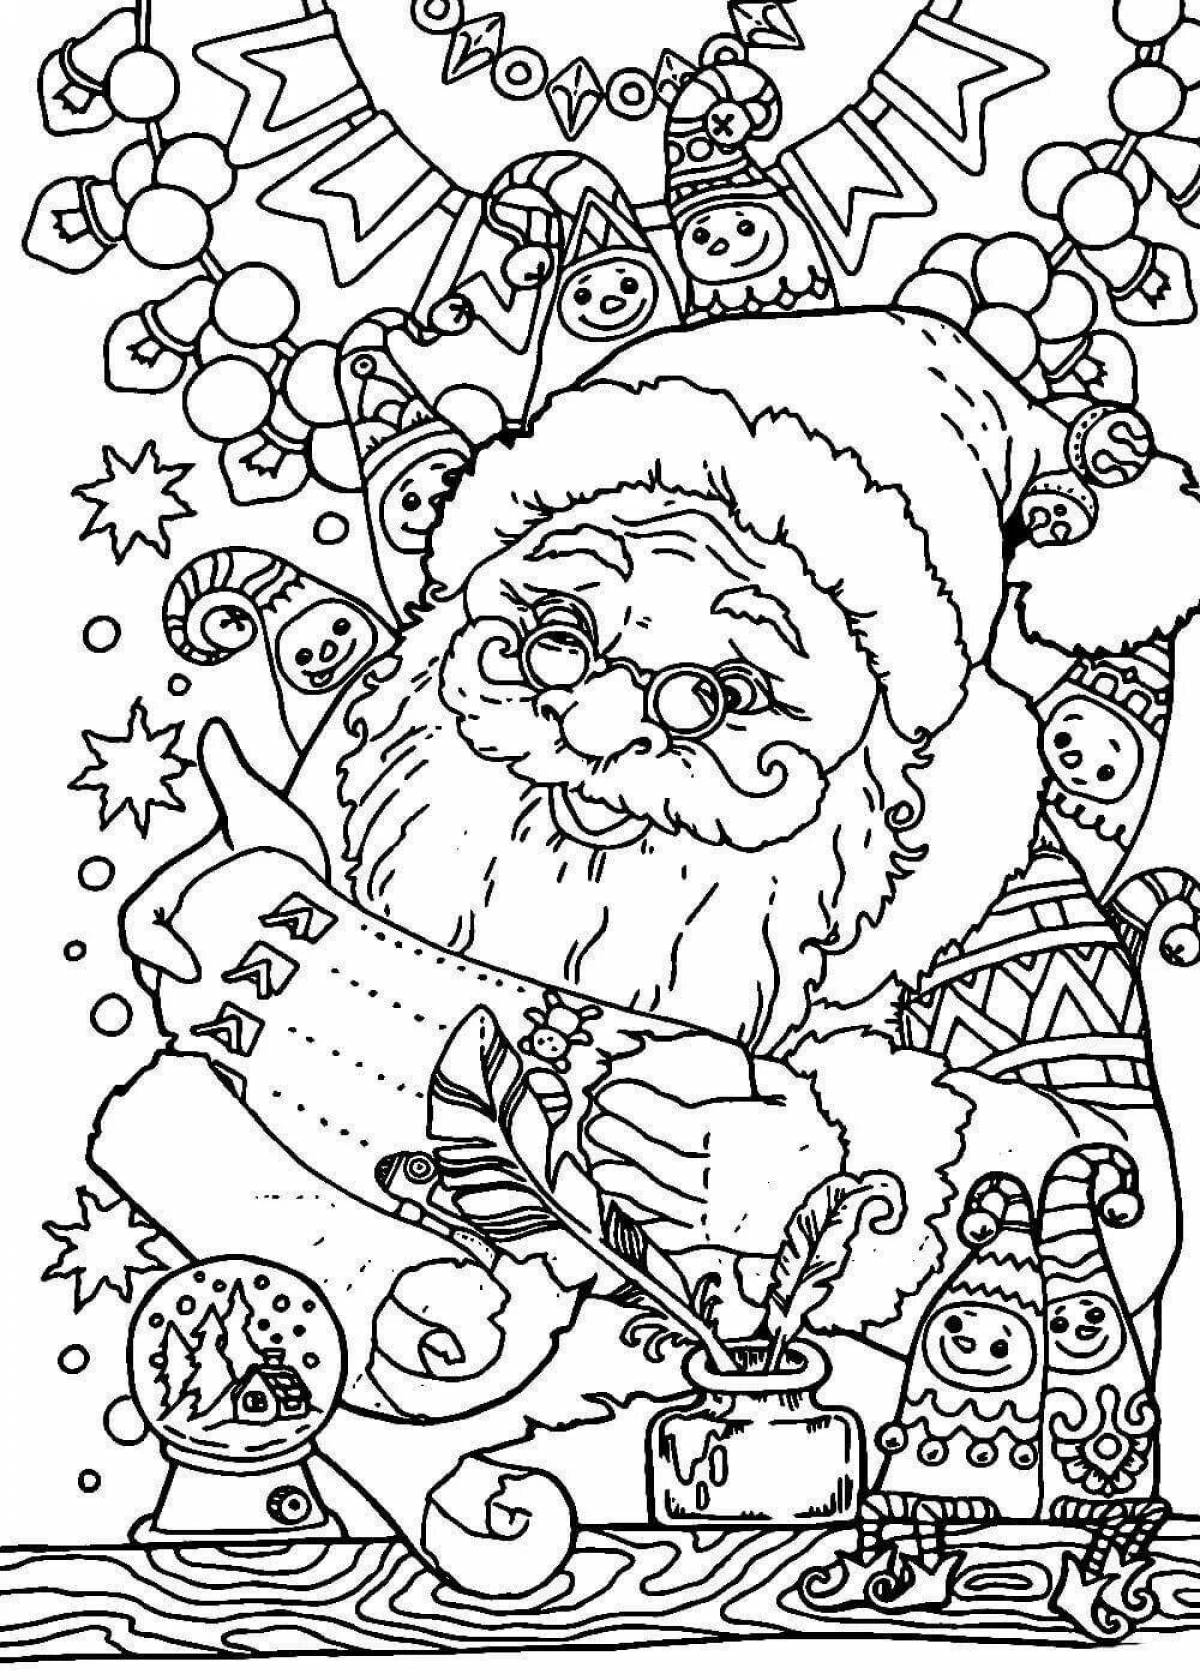 Rainbow Christmas anti-stress coloring book